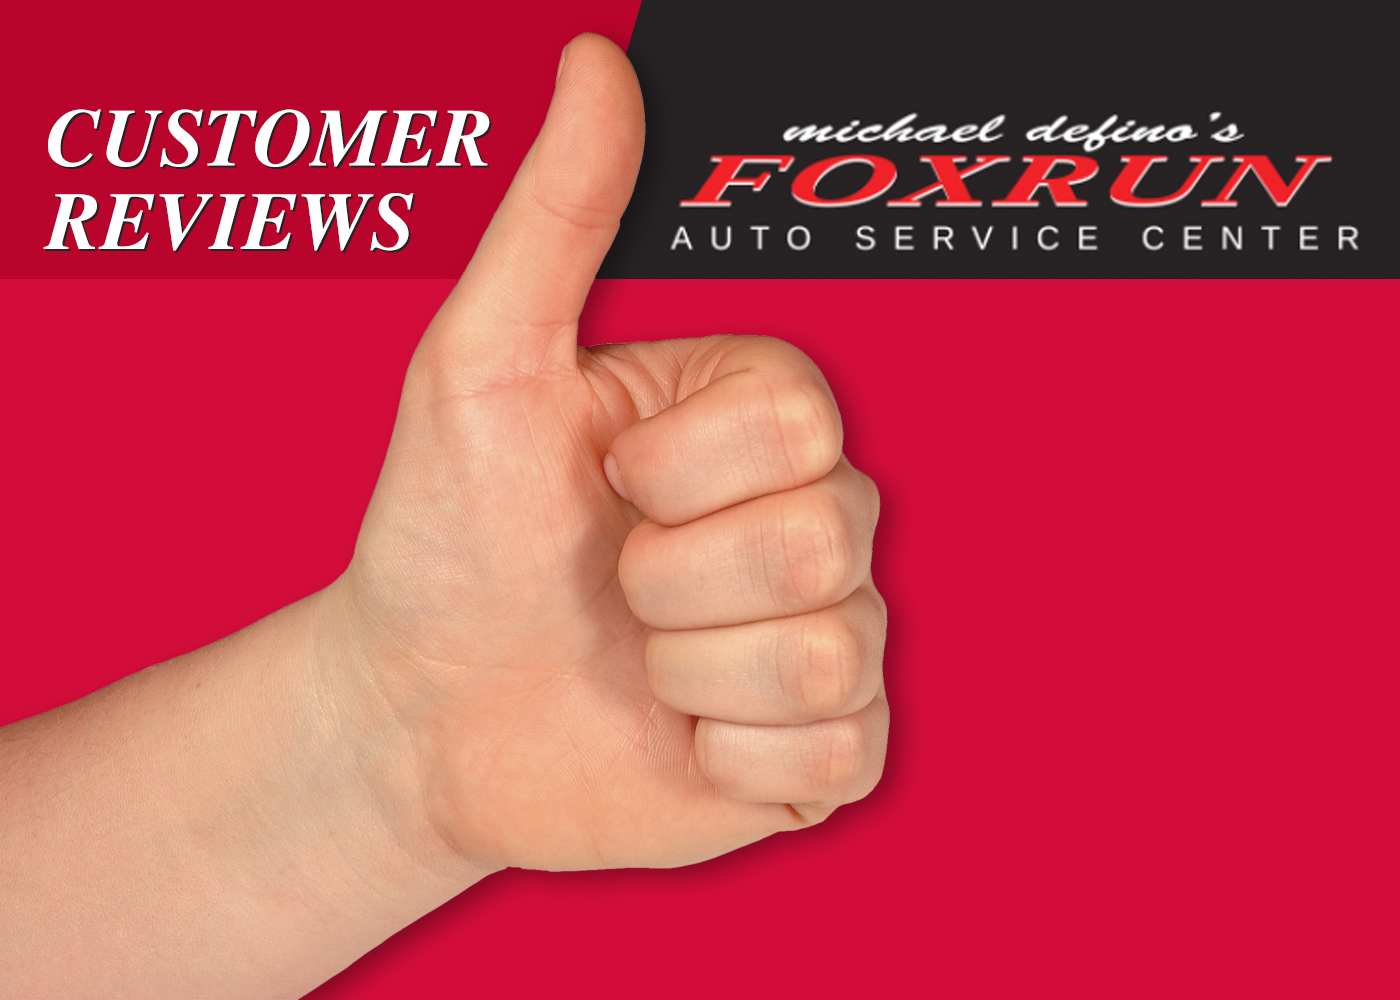 Recent Customer Reviews of Fox Run Auto